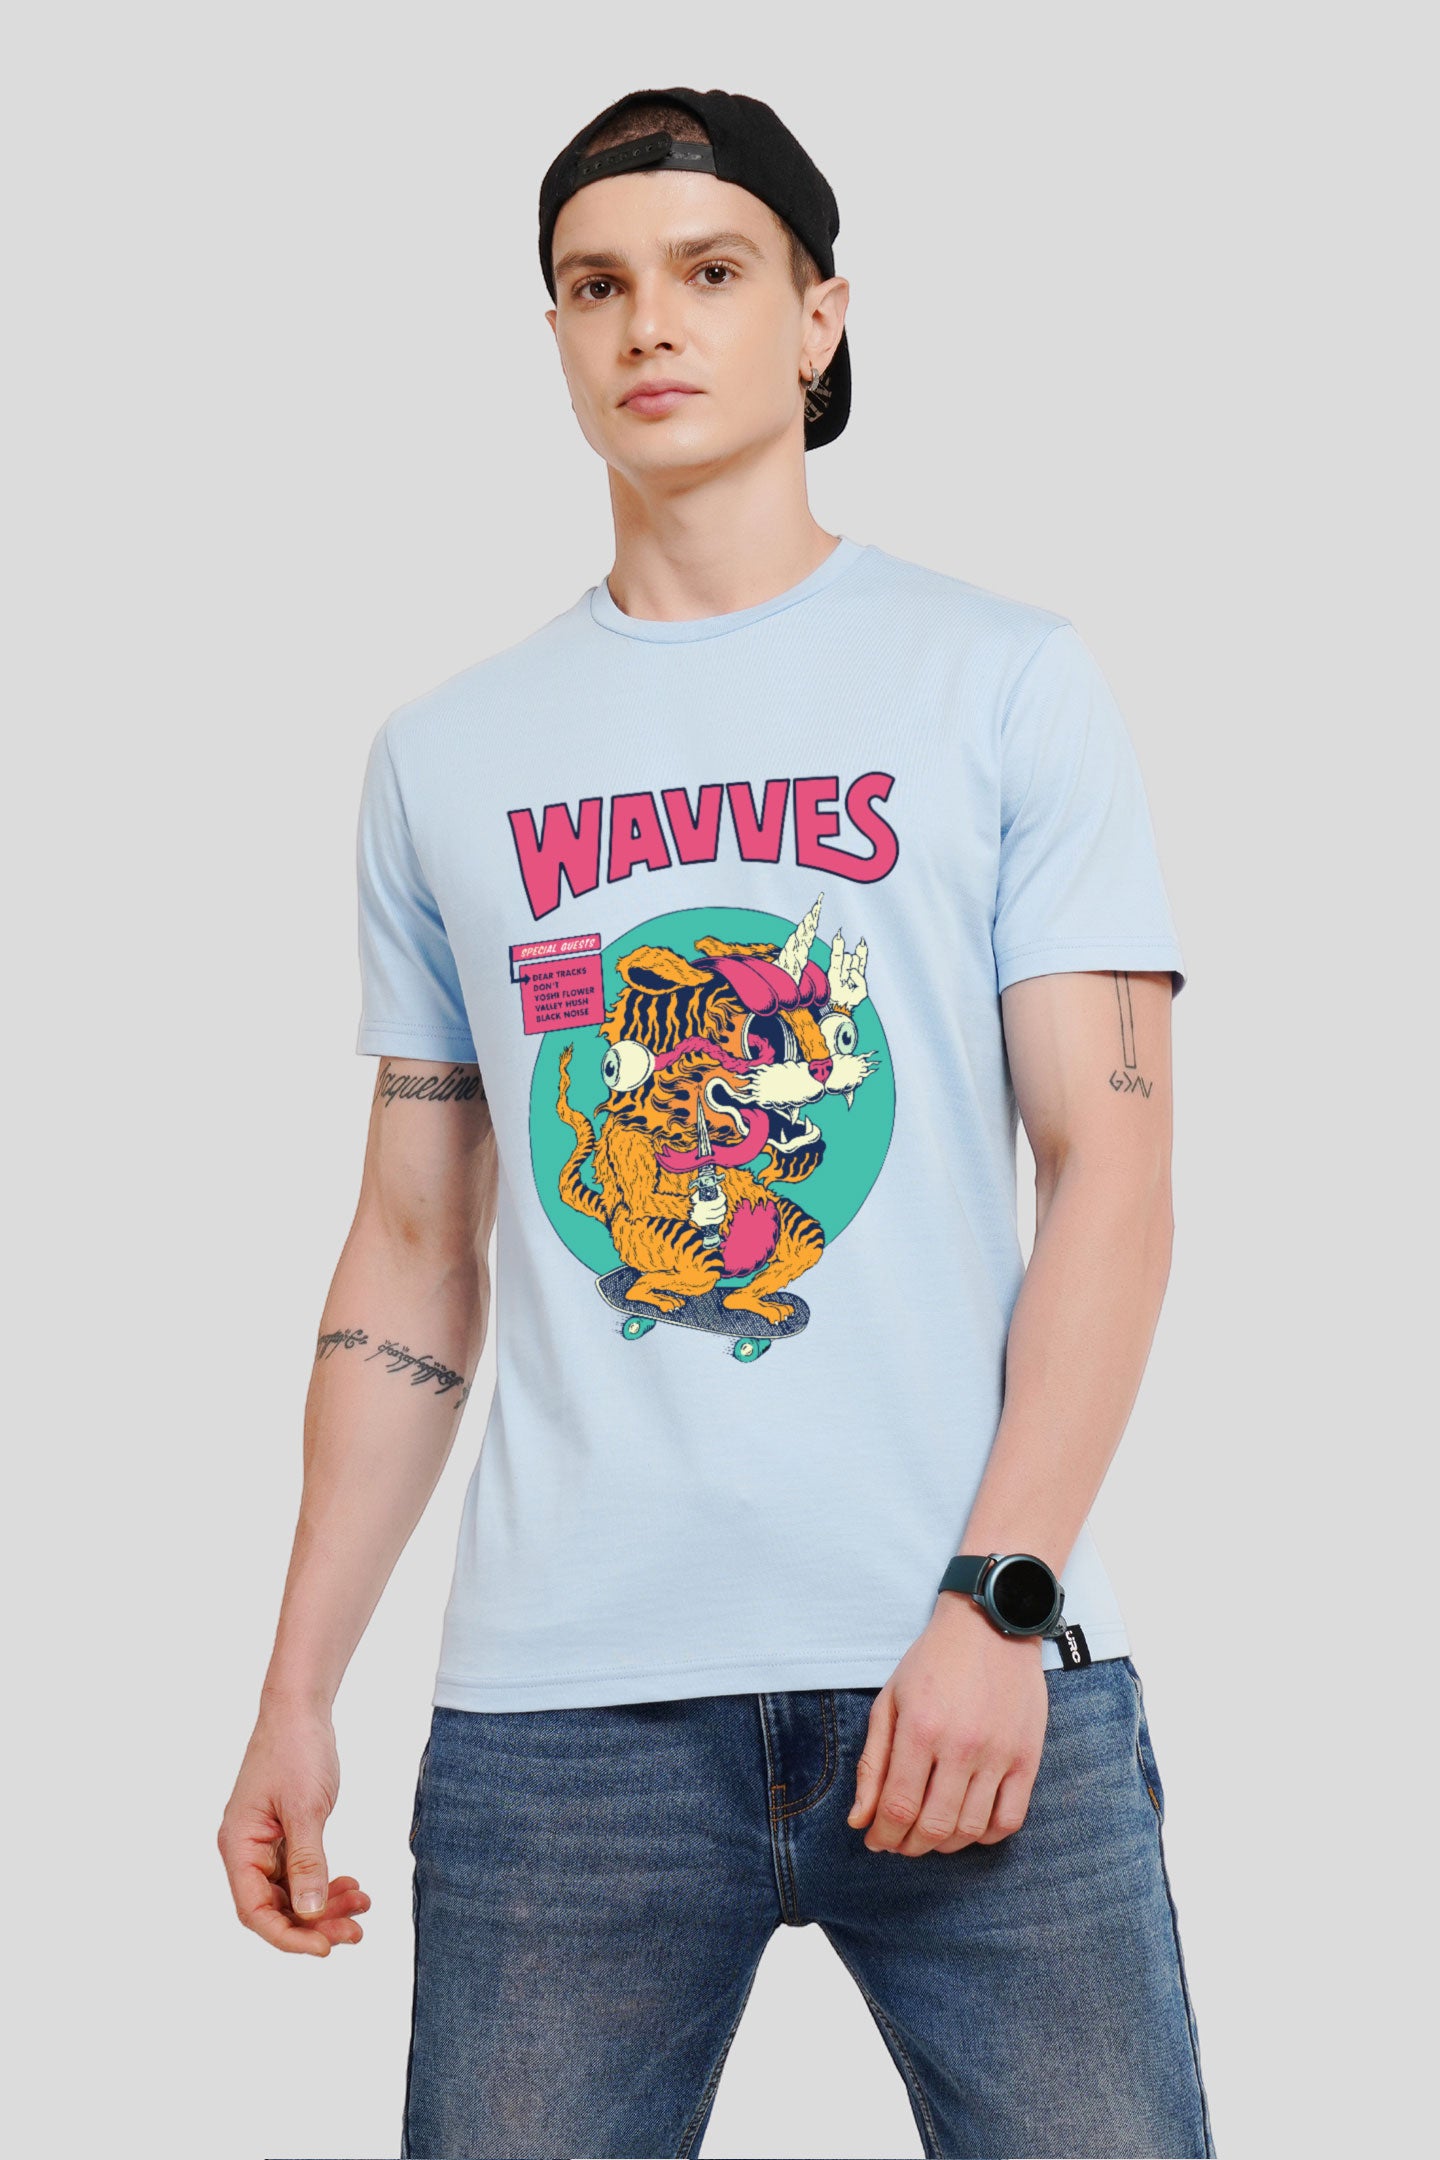 Wavves Powder Blue Printed T Shirt Men Regular Fit With Front Design Pic 5